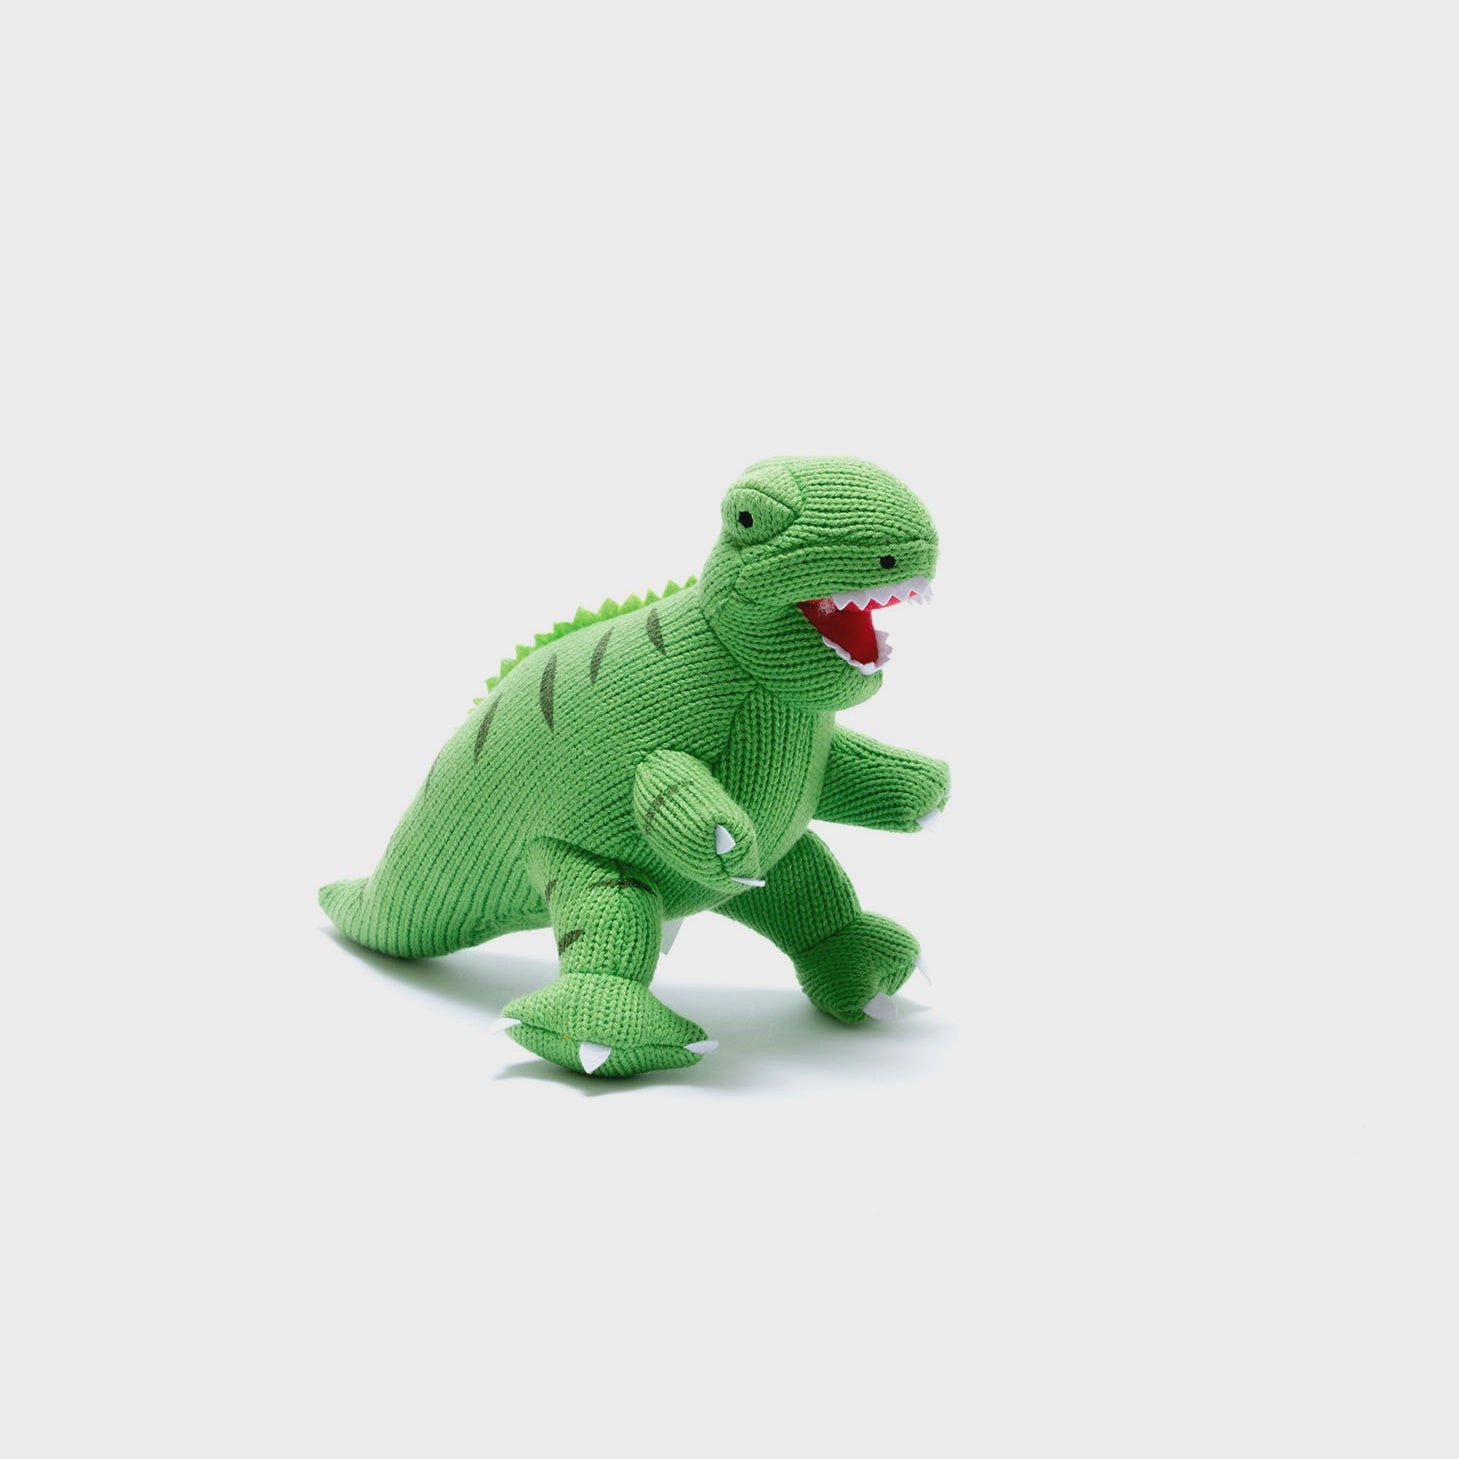 Knitted Dinosaur Plush Toy - Green T-Rex